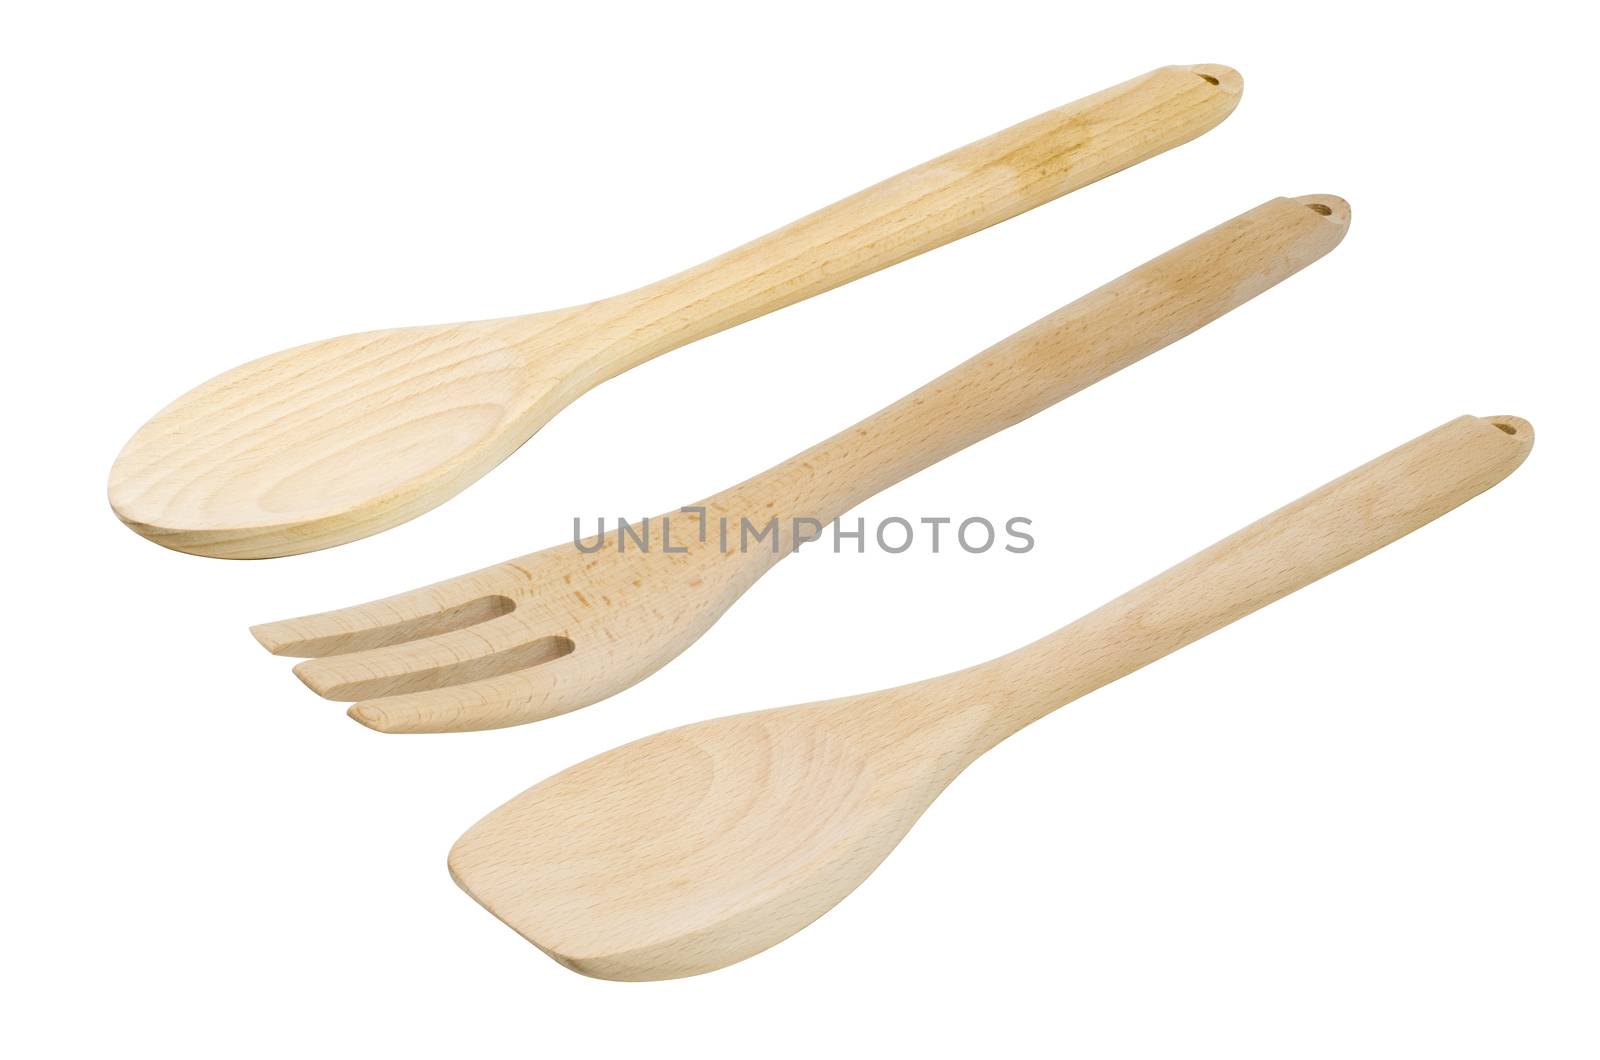 Wooden kitchen utensils set, isolated  white background by phochi